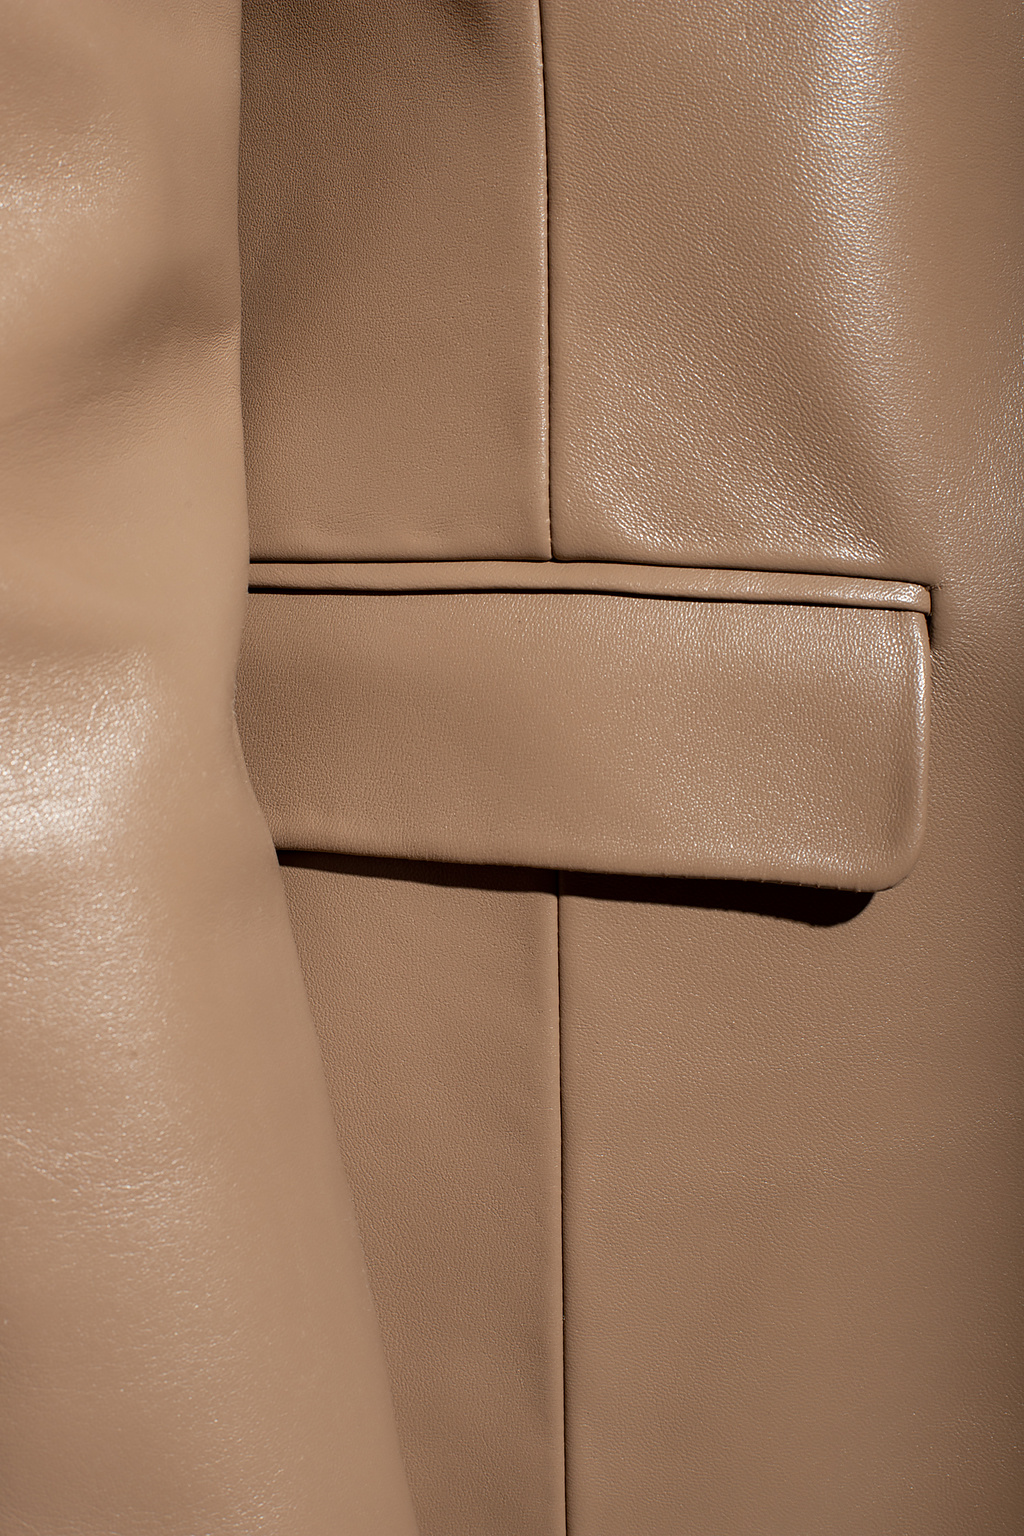 The Mannei ‘Kerak’ leather blazer